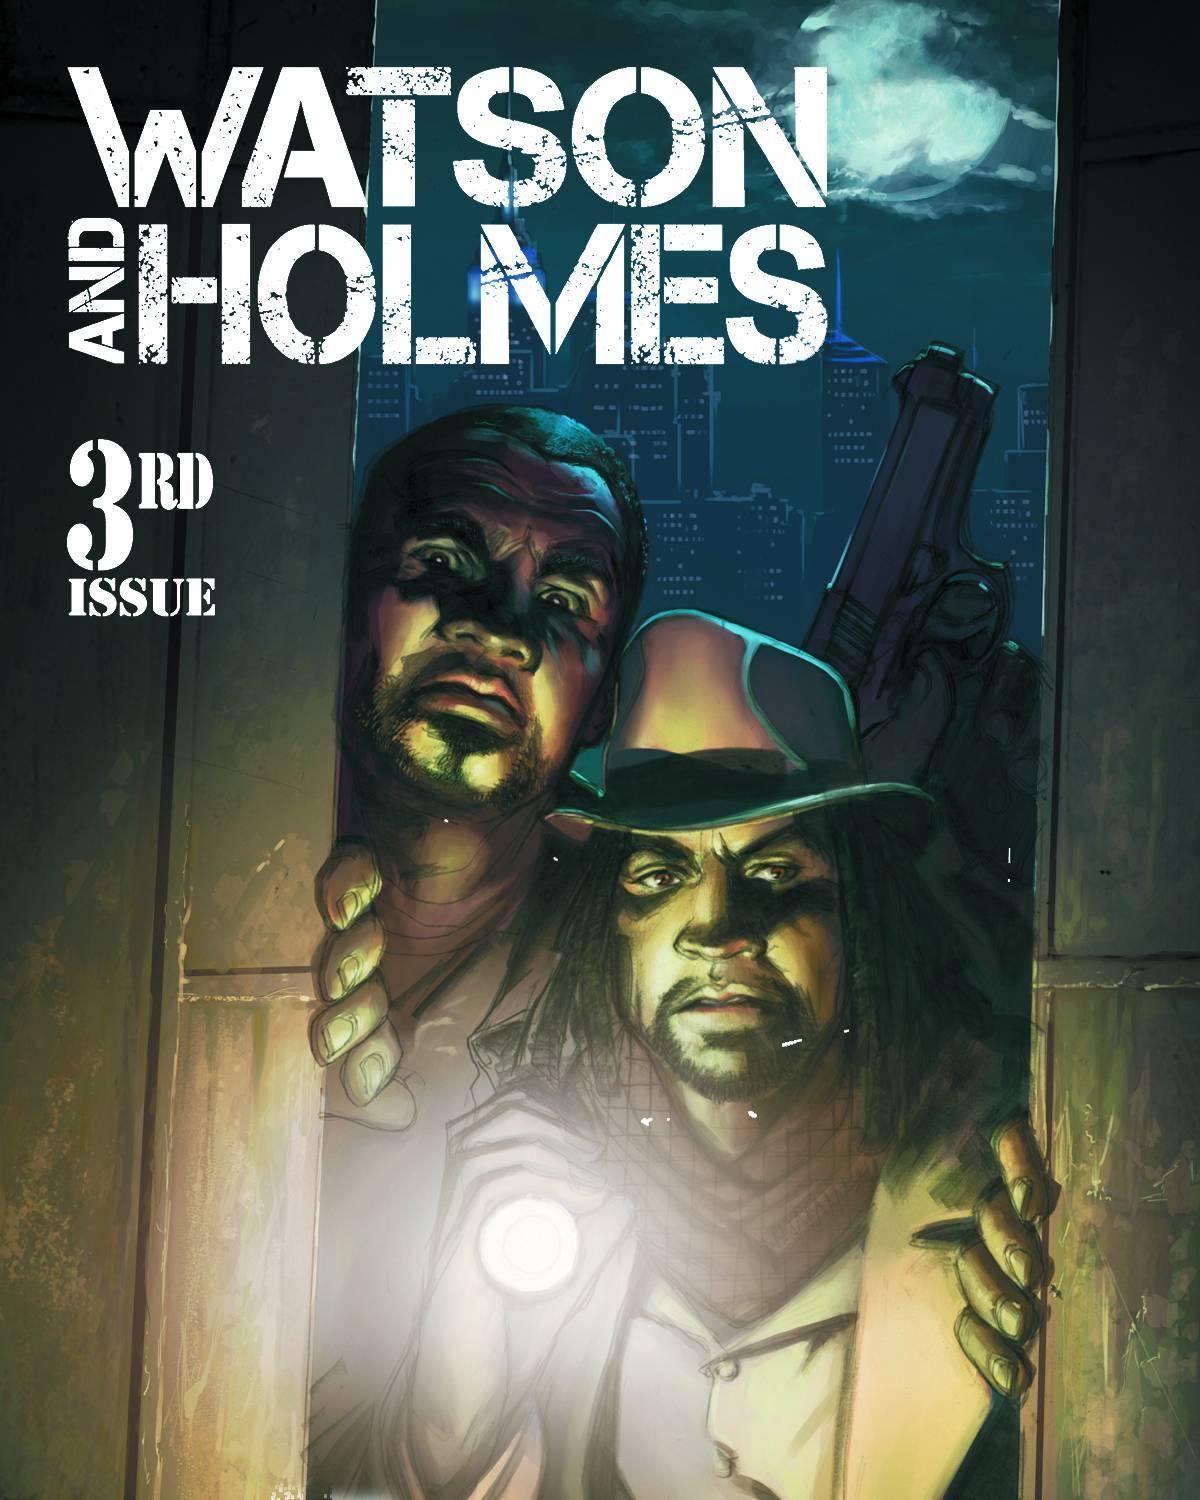 WATSON AND HOLMES #3 - Kings Comics